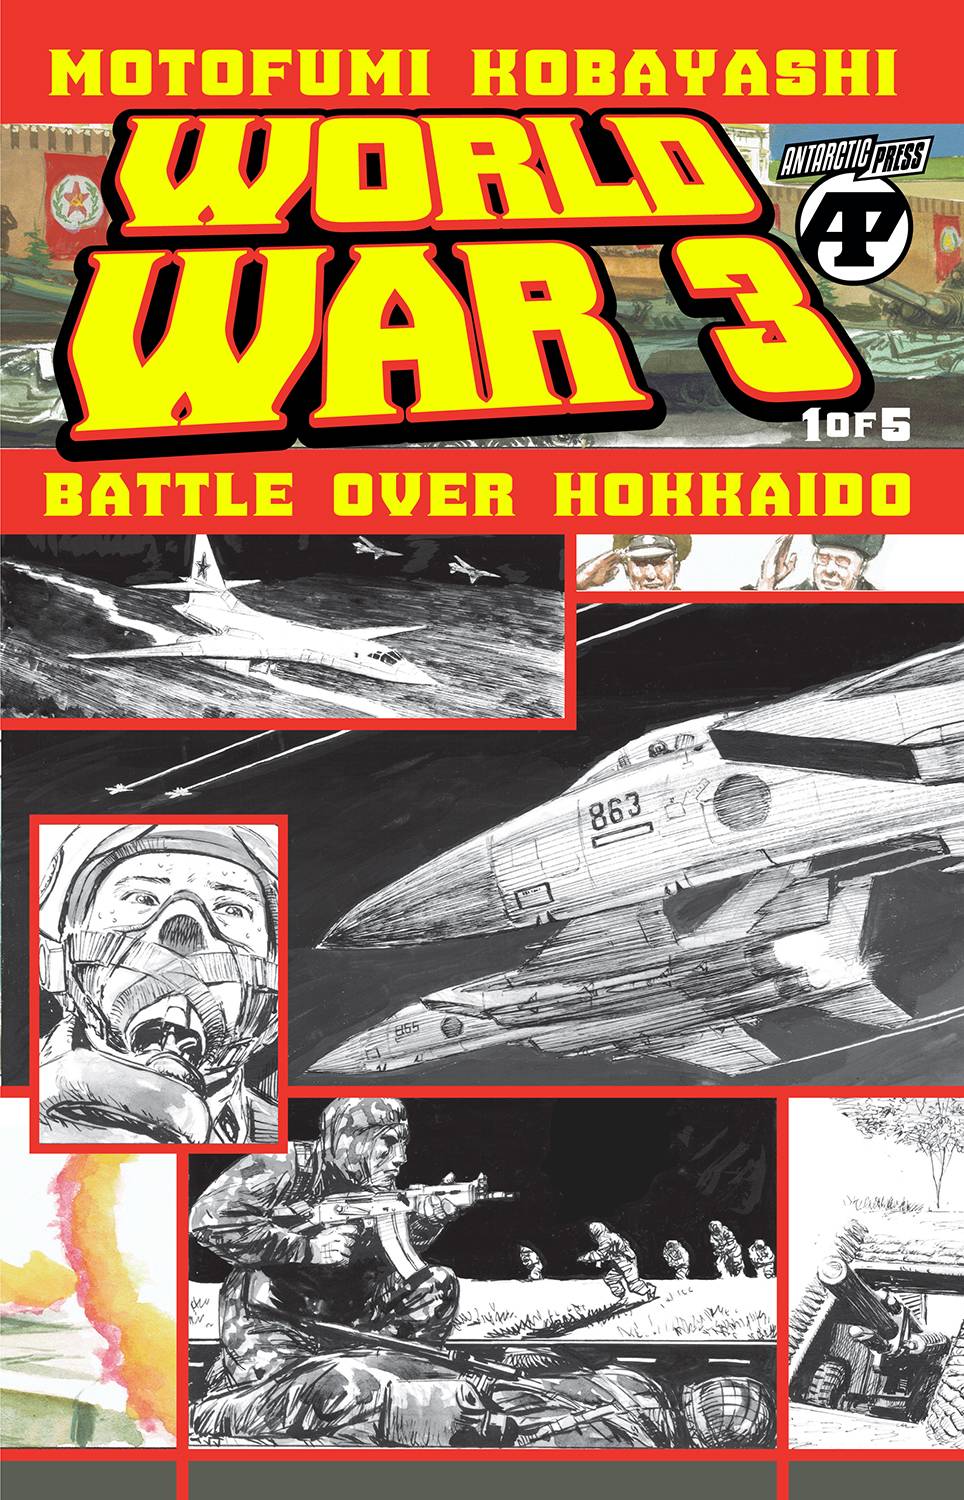 WORLD WAR 3 BATTLE OVER HOKKAIDO #1 (OF 5)